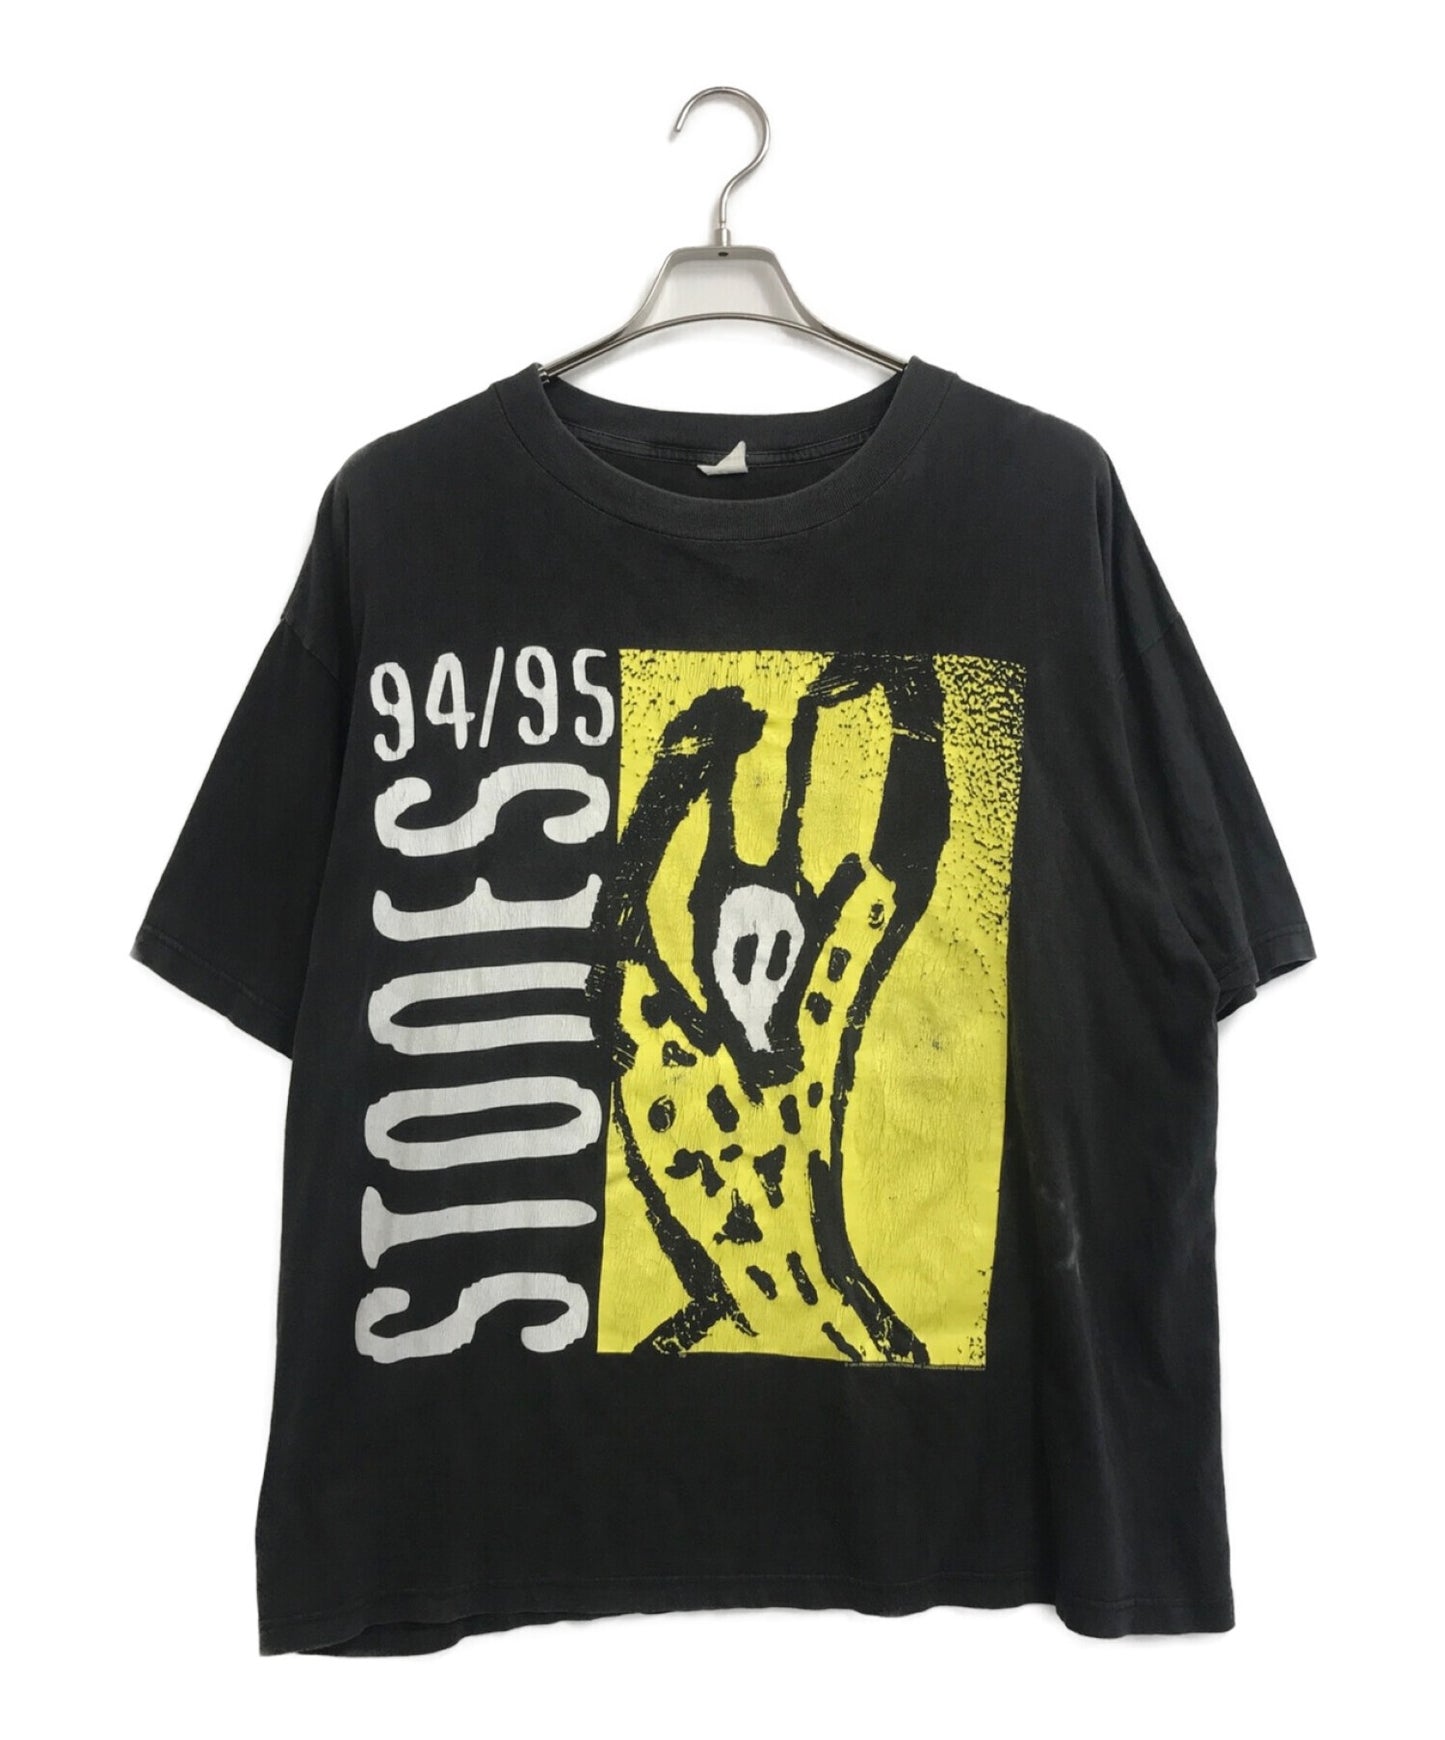 ROLLING STONES Band T-Shirt WORLD TOUR 94/95/95 Copyright